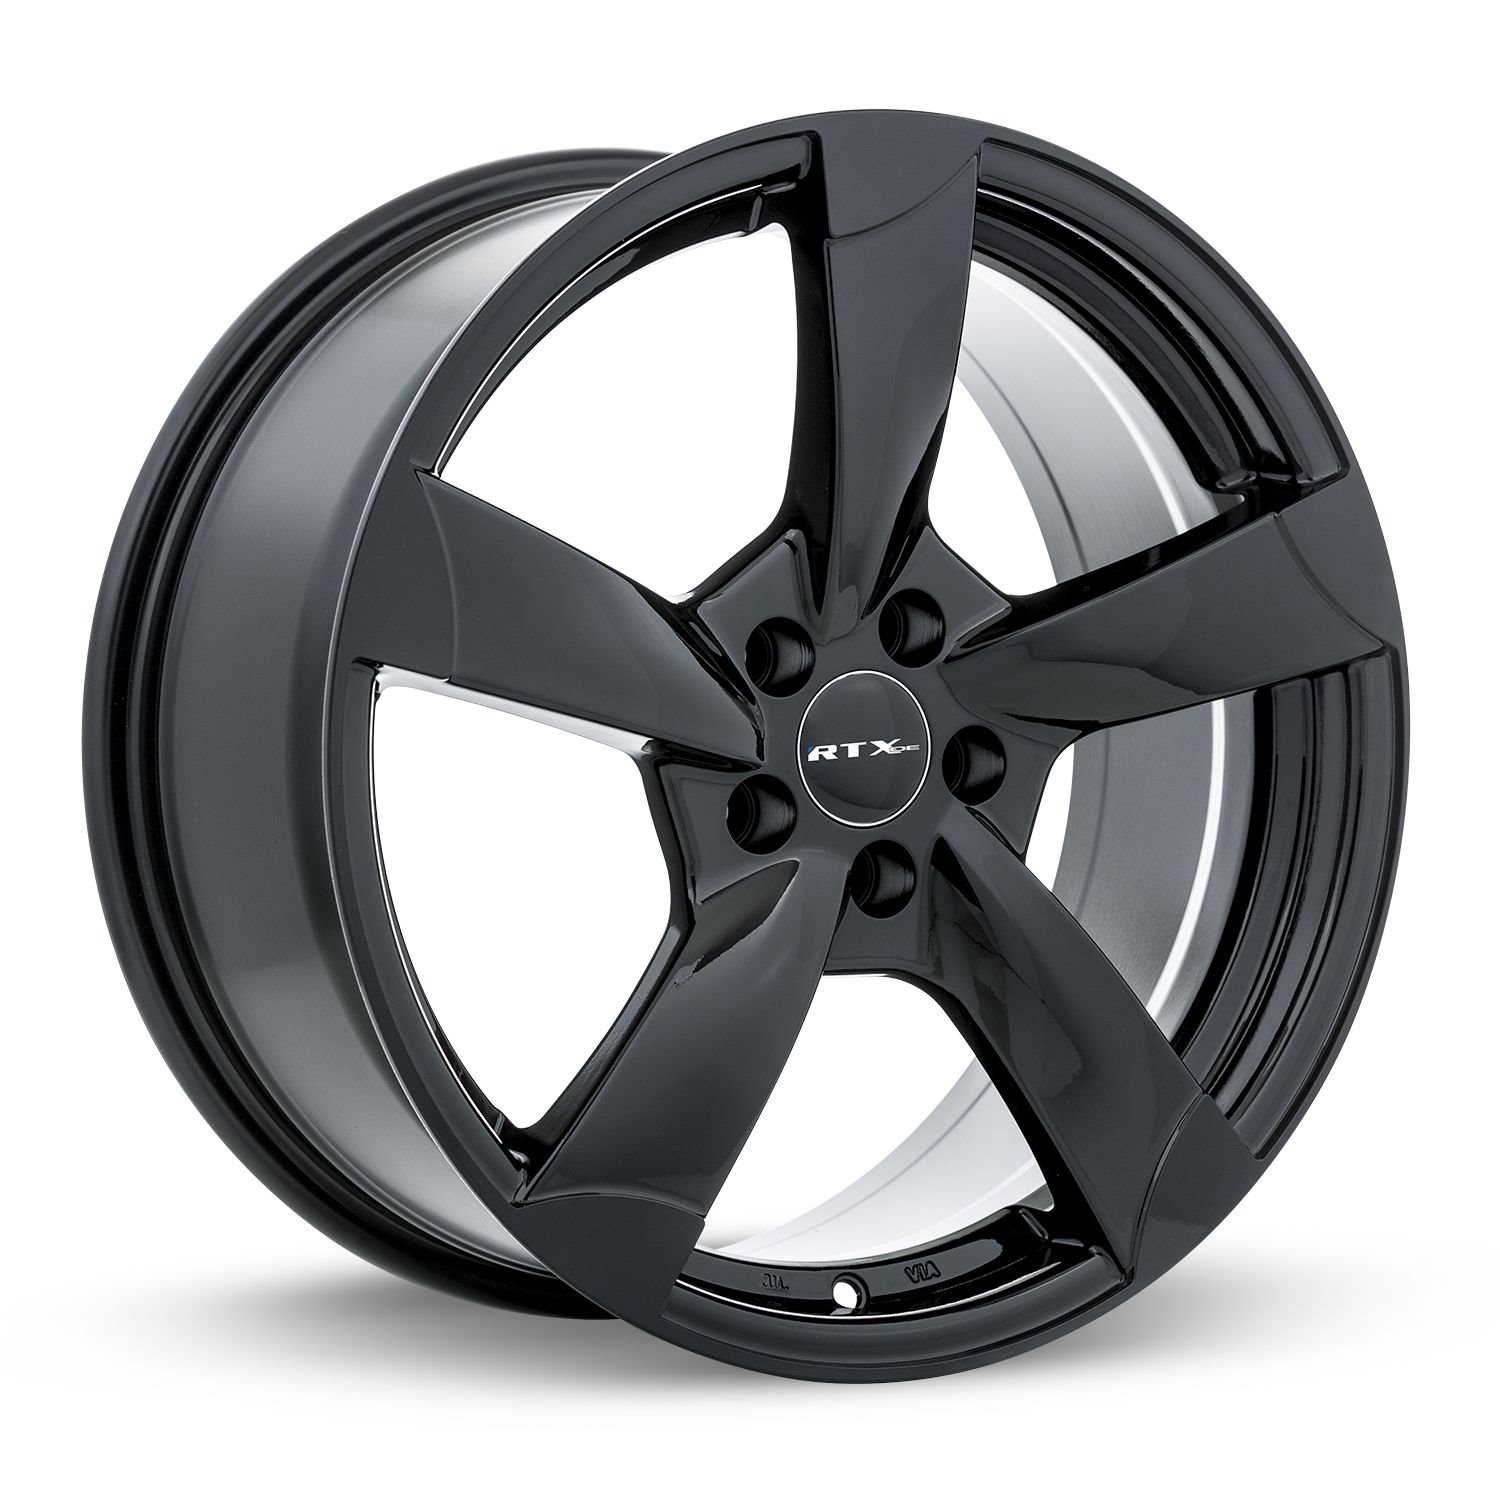 082156 OE-Series RS II Wheel [Size: 17" x 7.50"] Gloss Black Finish